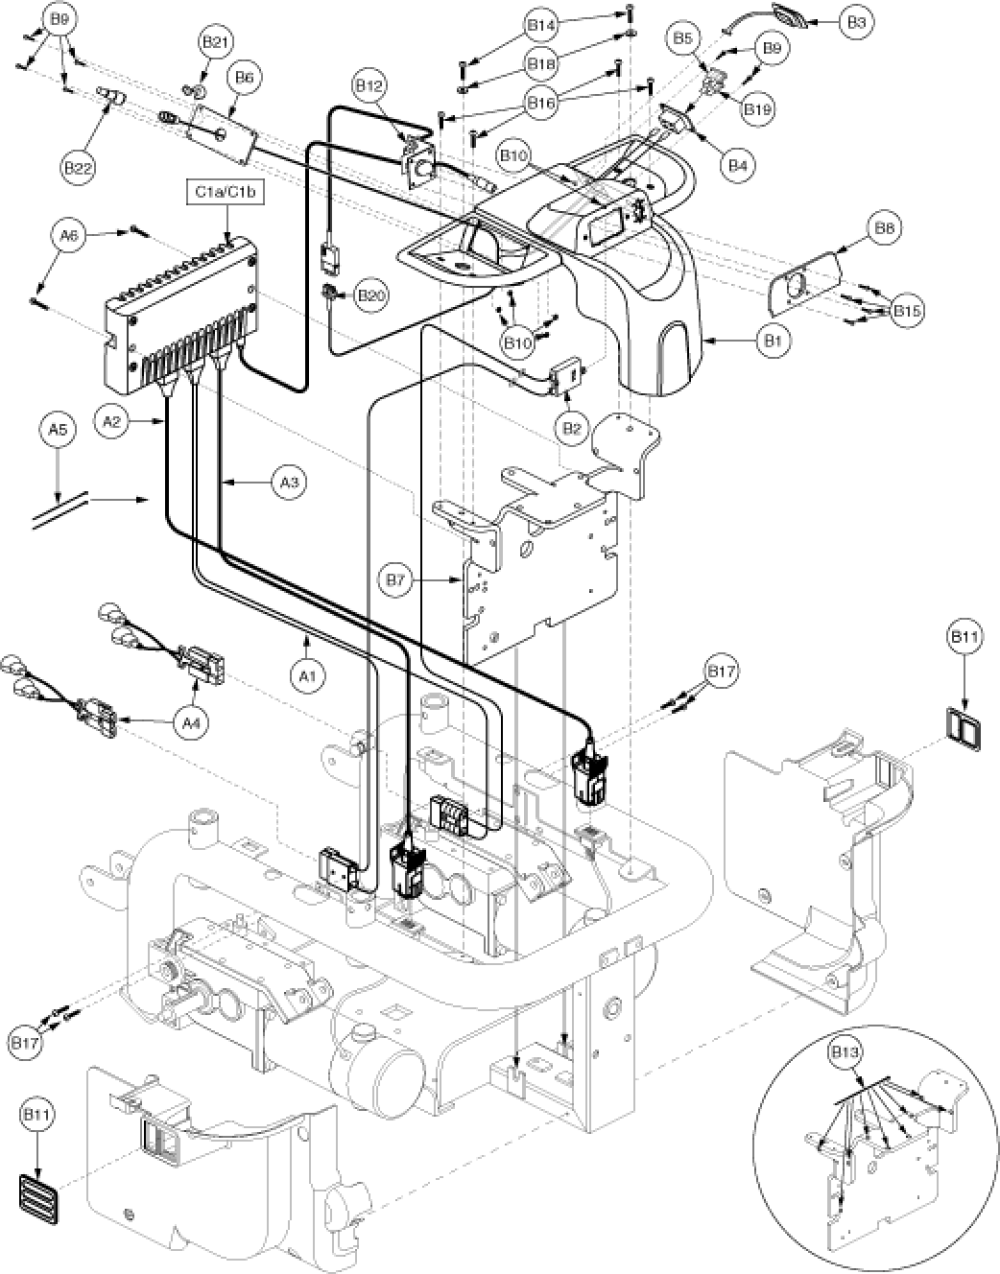 Q Remote Plus Tray, Offboard Charger, Quantum, Eleasmb4480 parts diagram